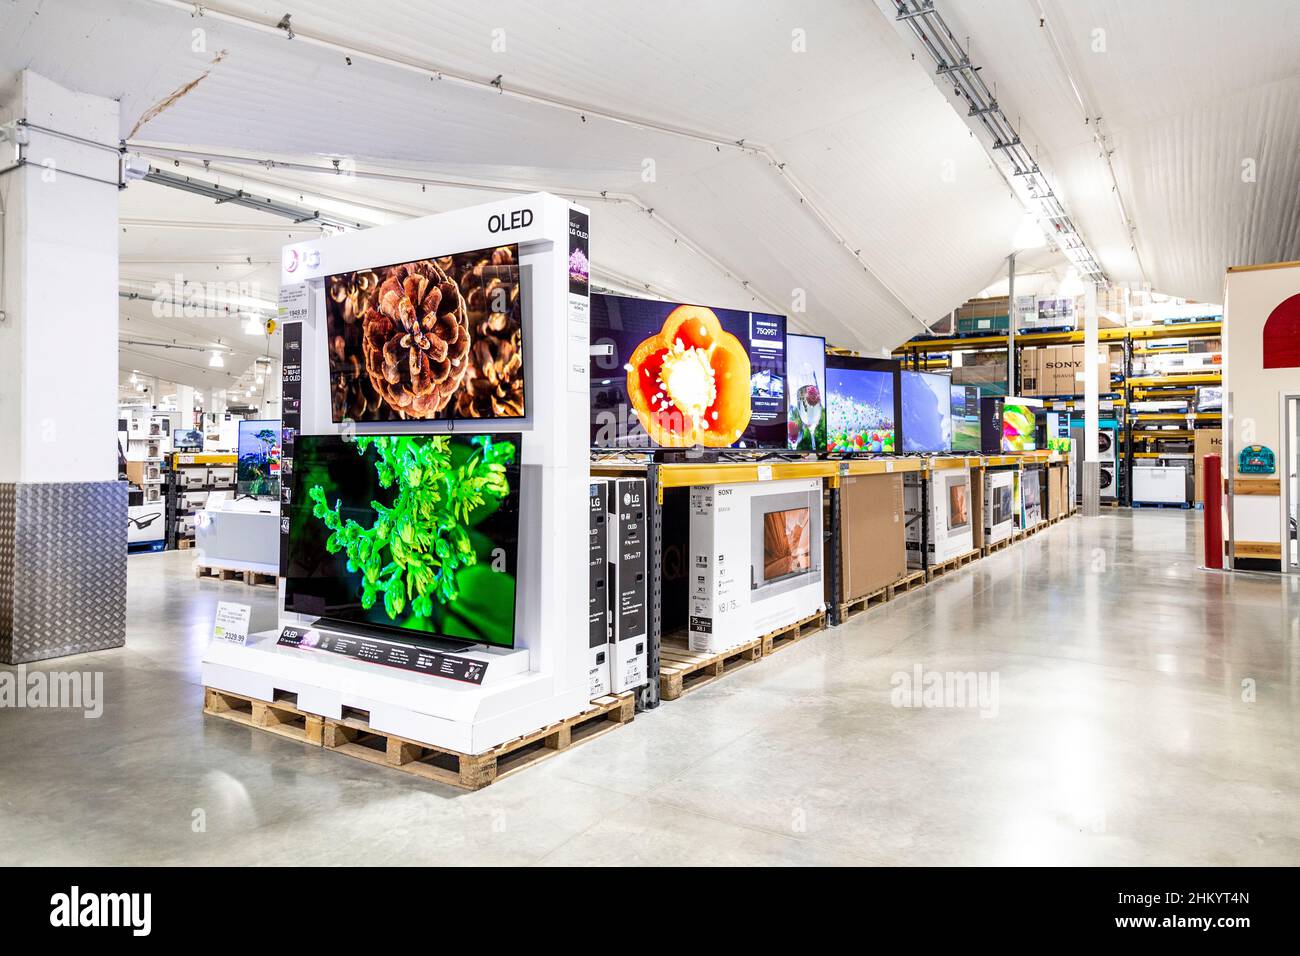 Television and electronics isle at wholesale supermarket Costco Stock Photo